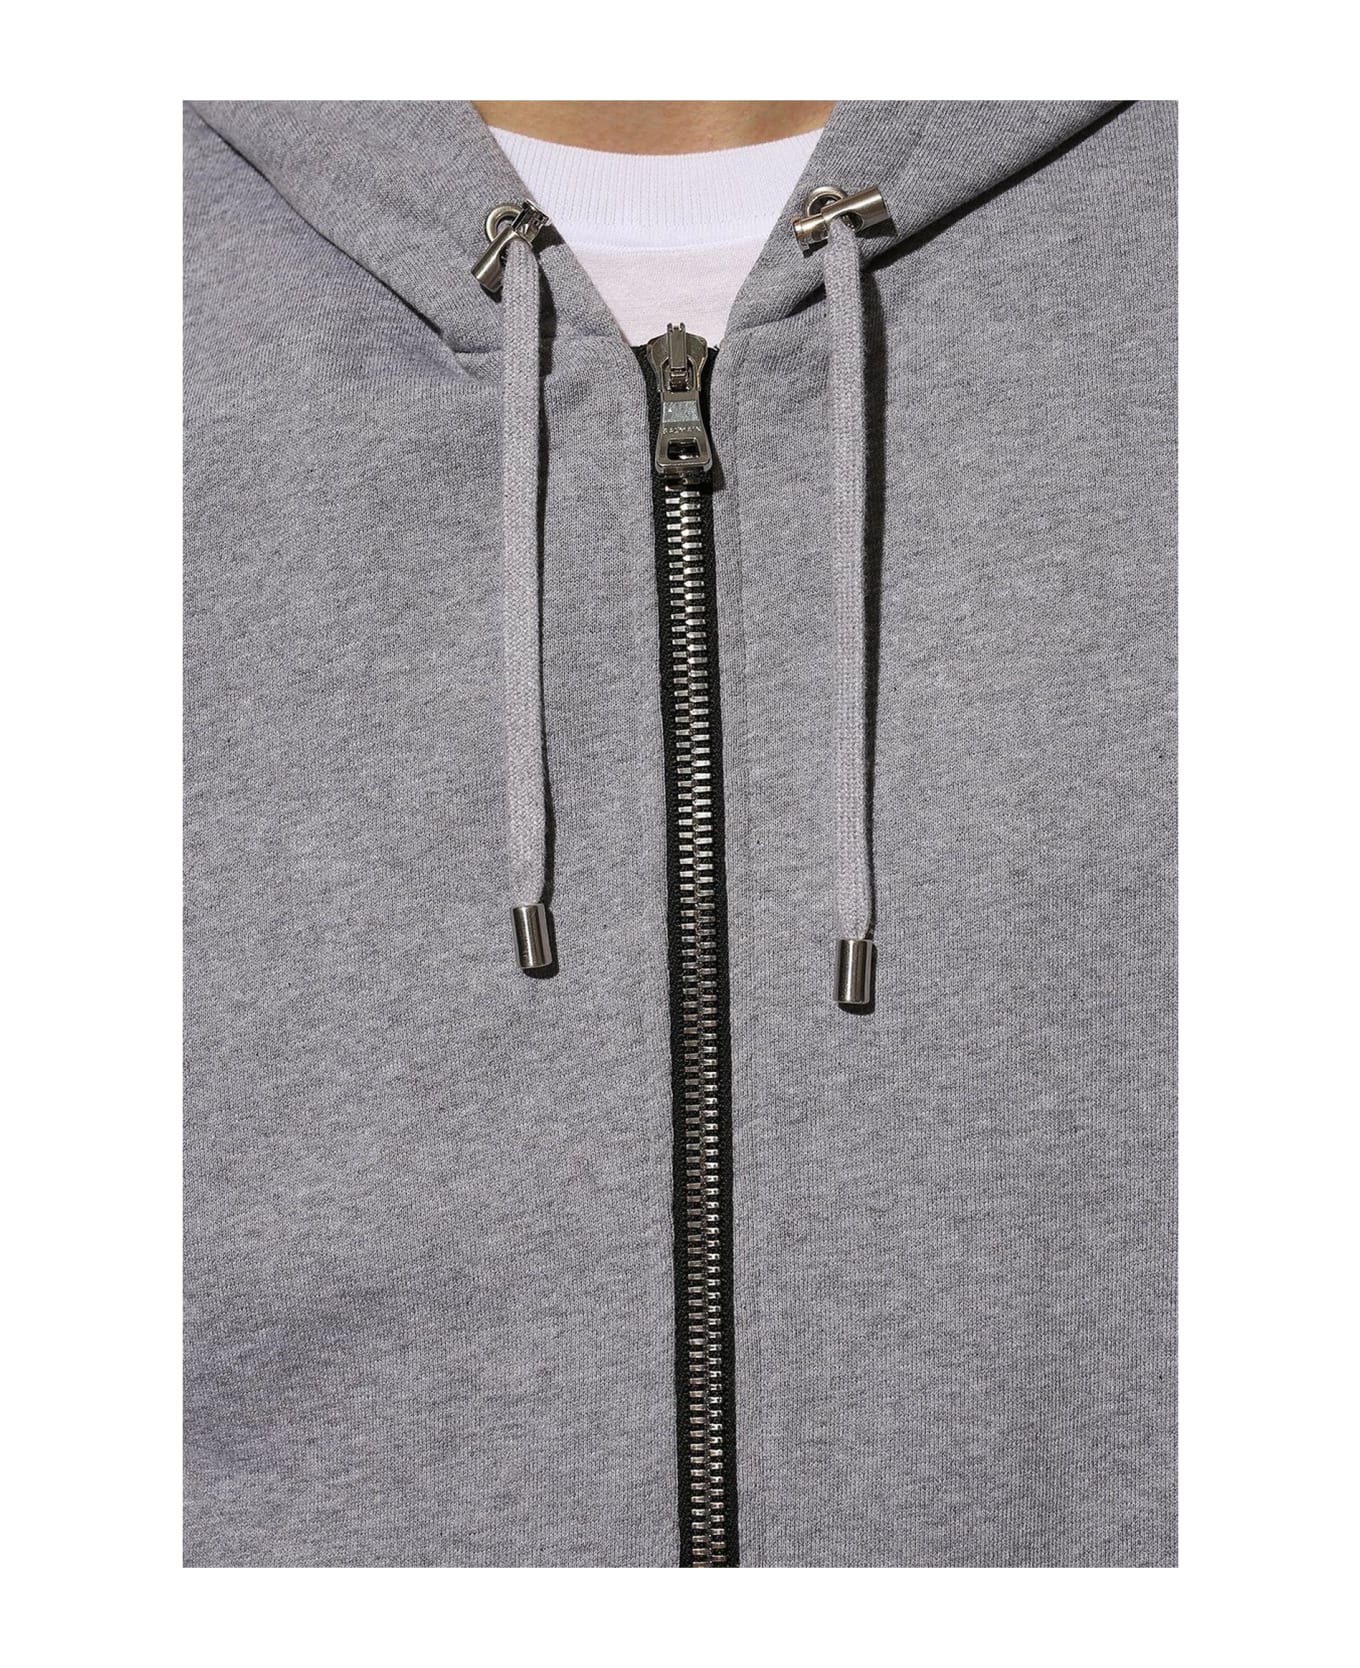 Balmain Logo Hooded Sweatshirt - Gray